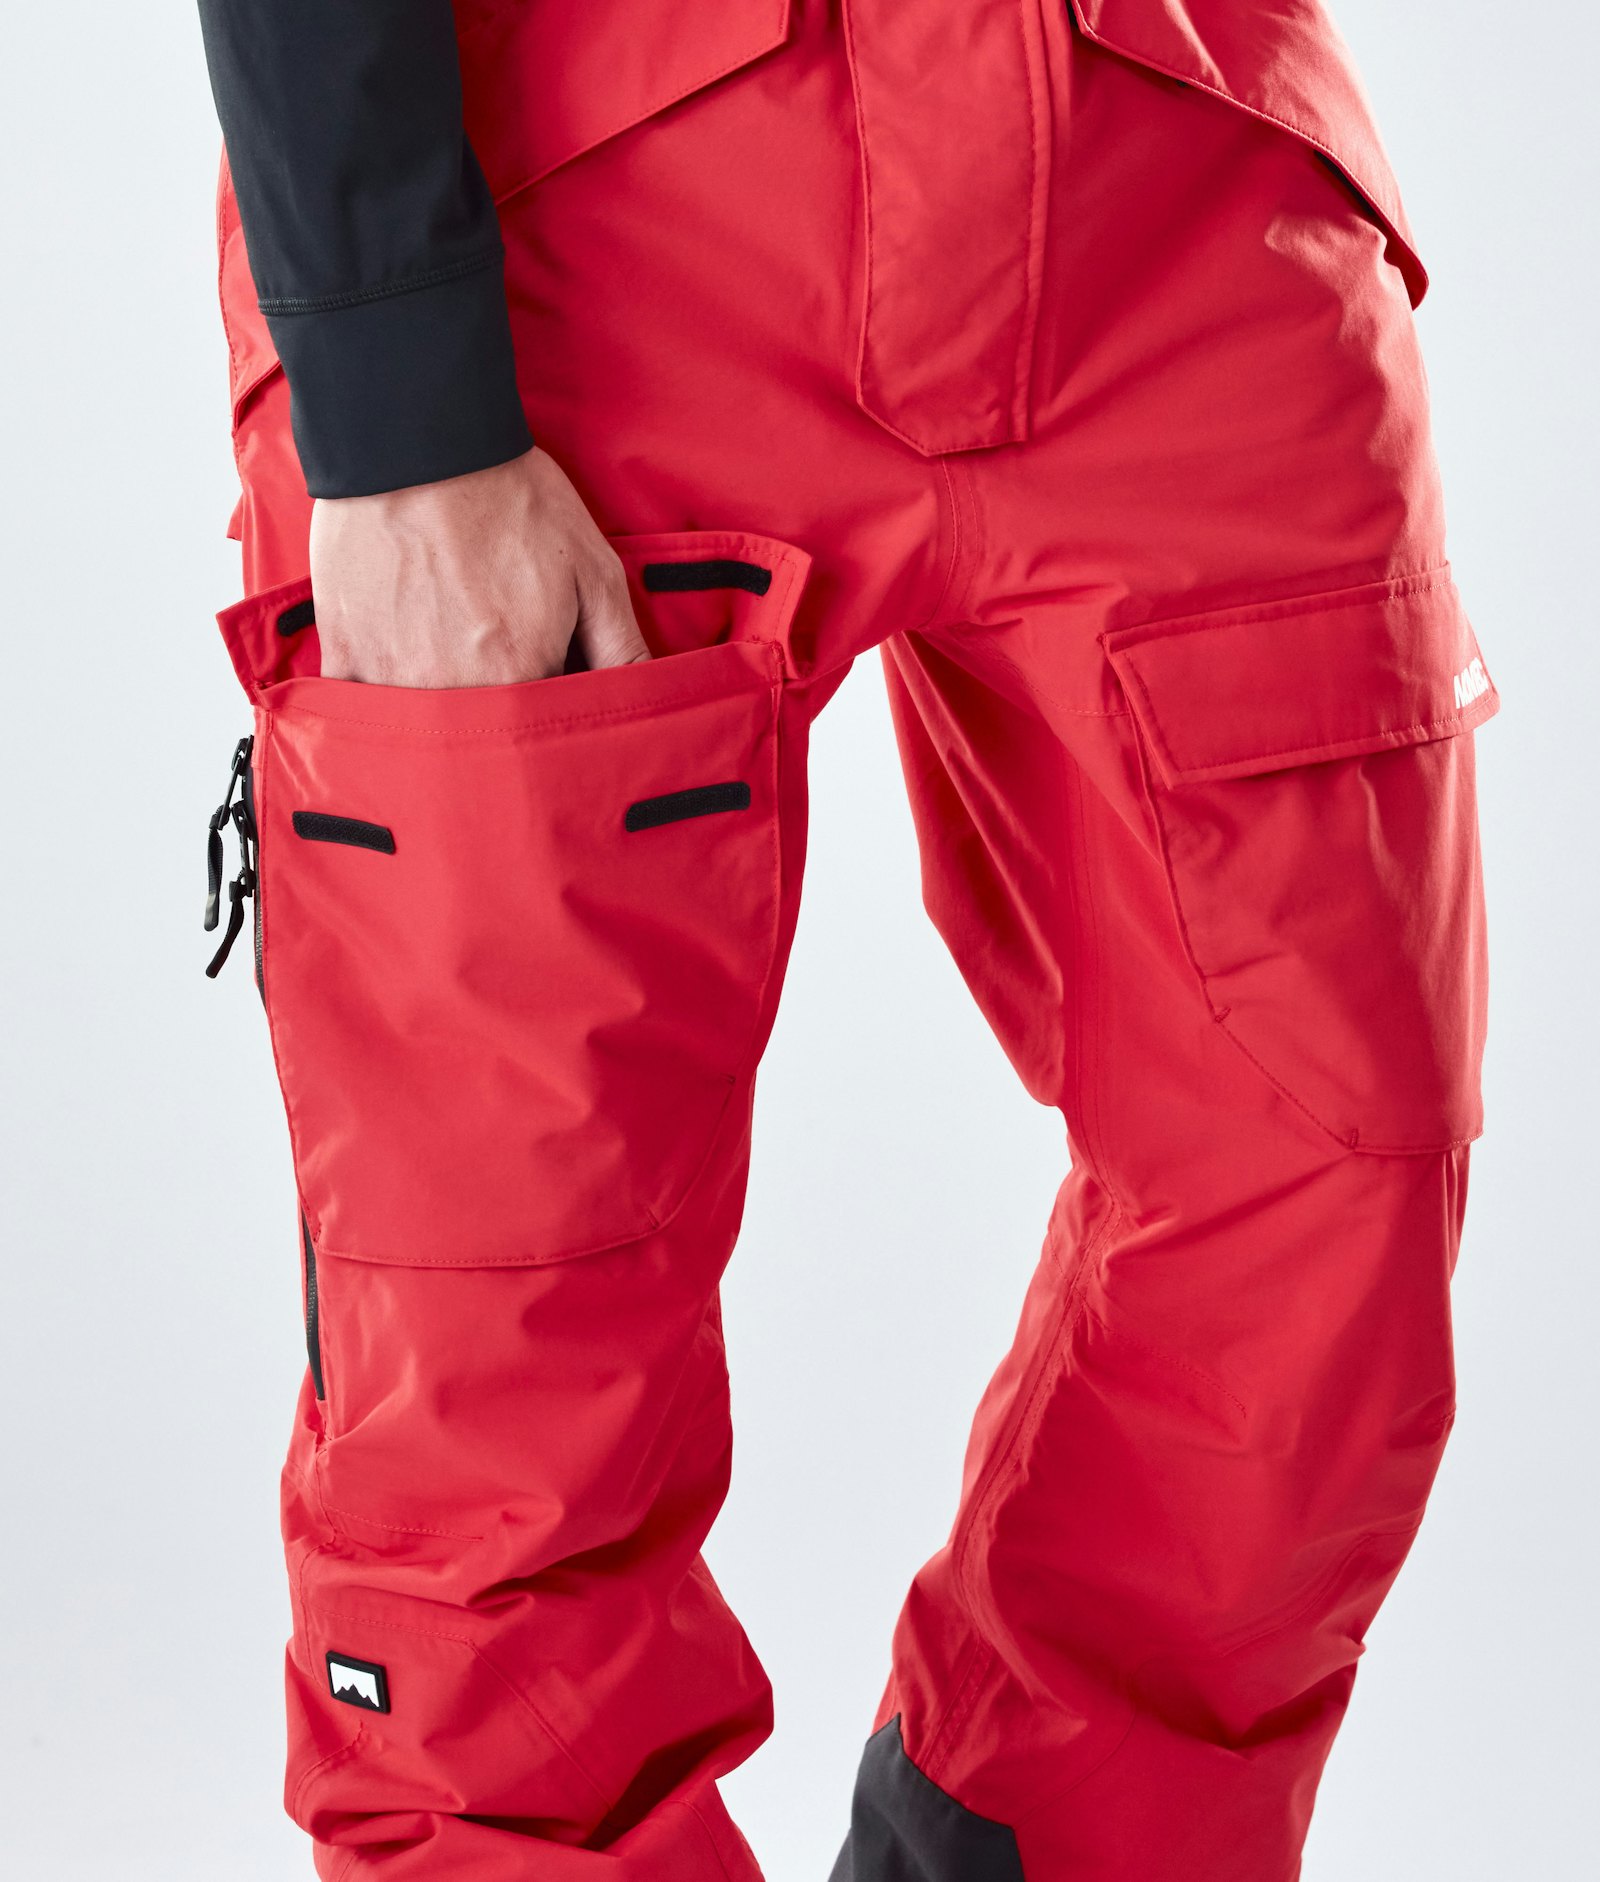 Fawk 2020 Snowboardbyxa Herr Red